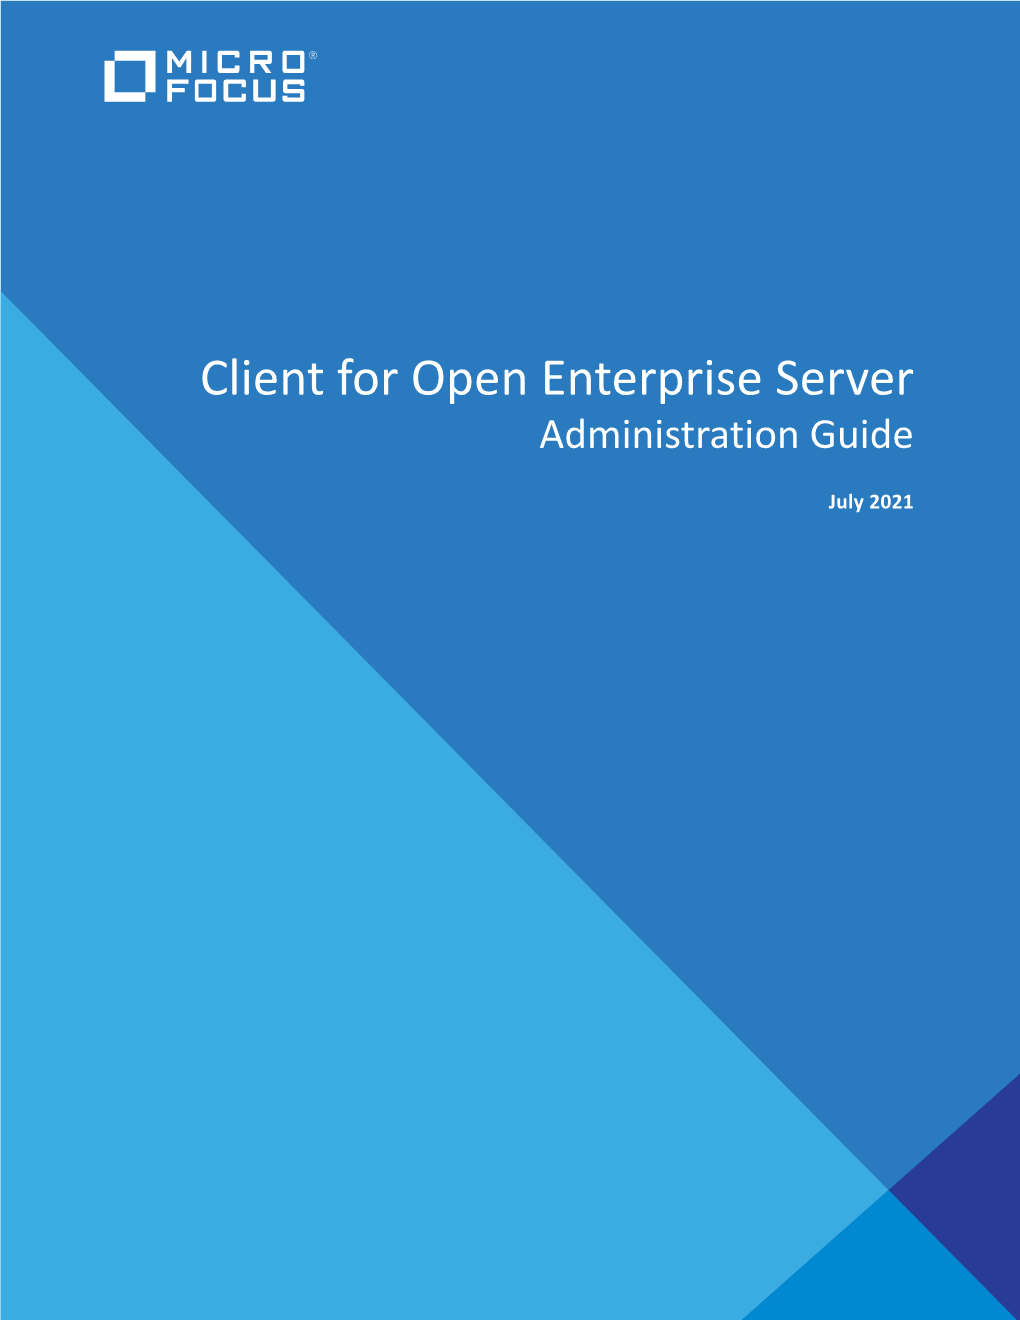 Client for Open Enterprise Server Administration Guide